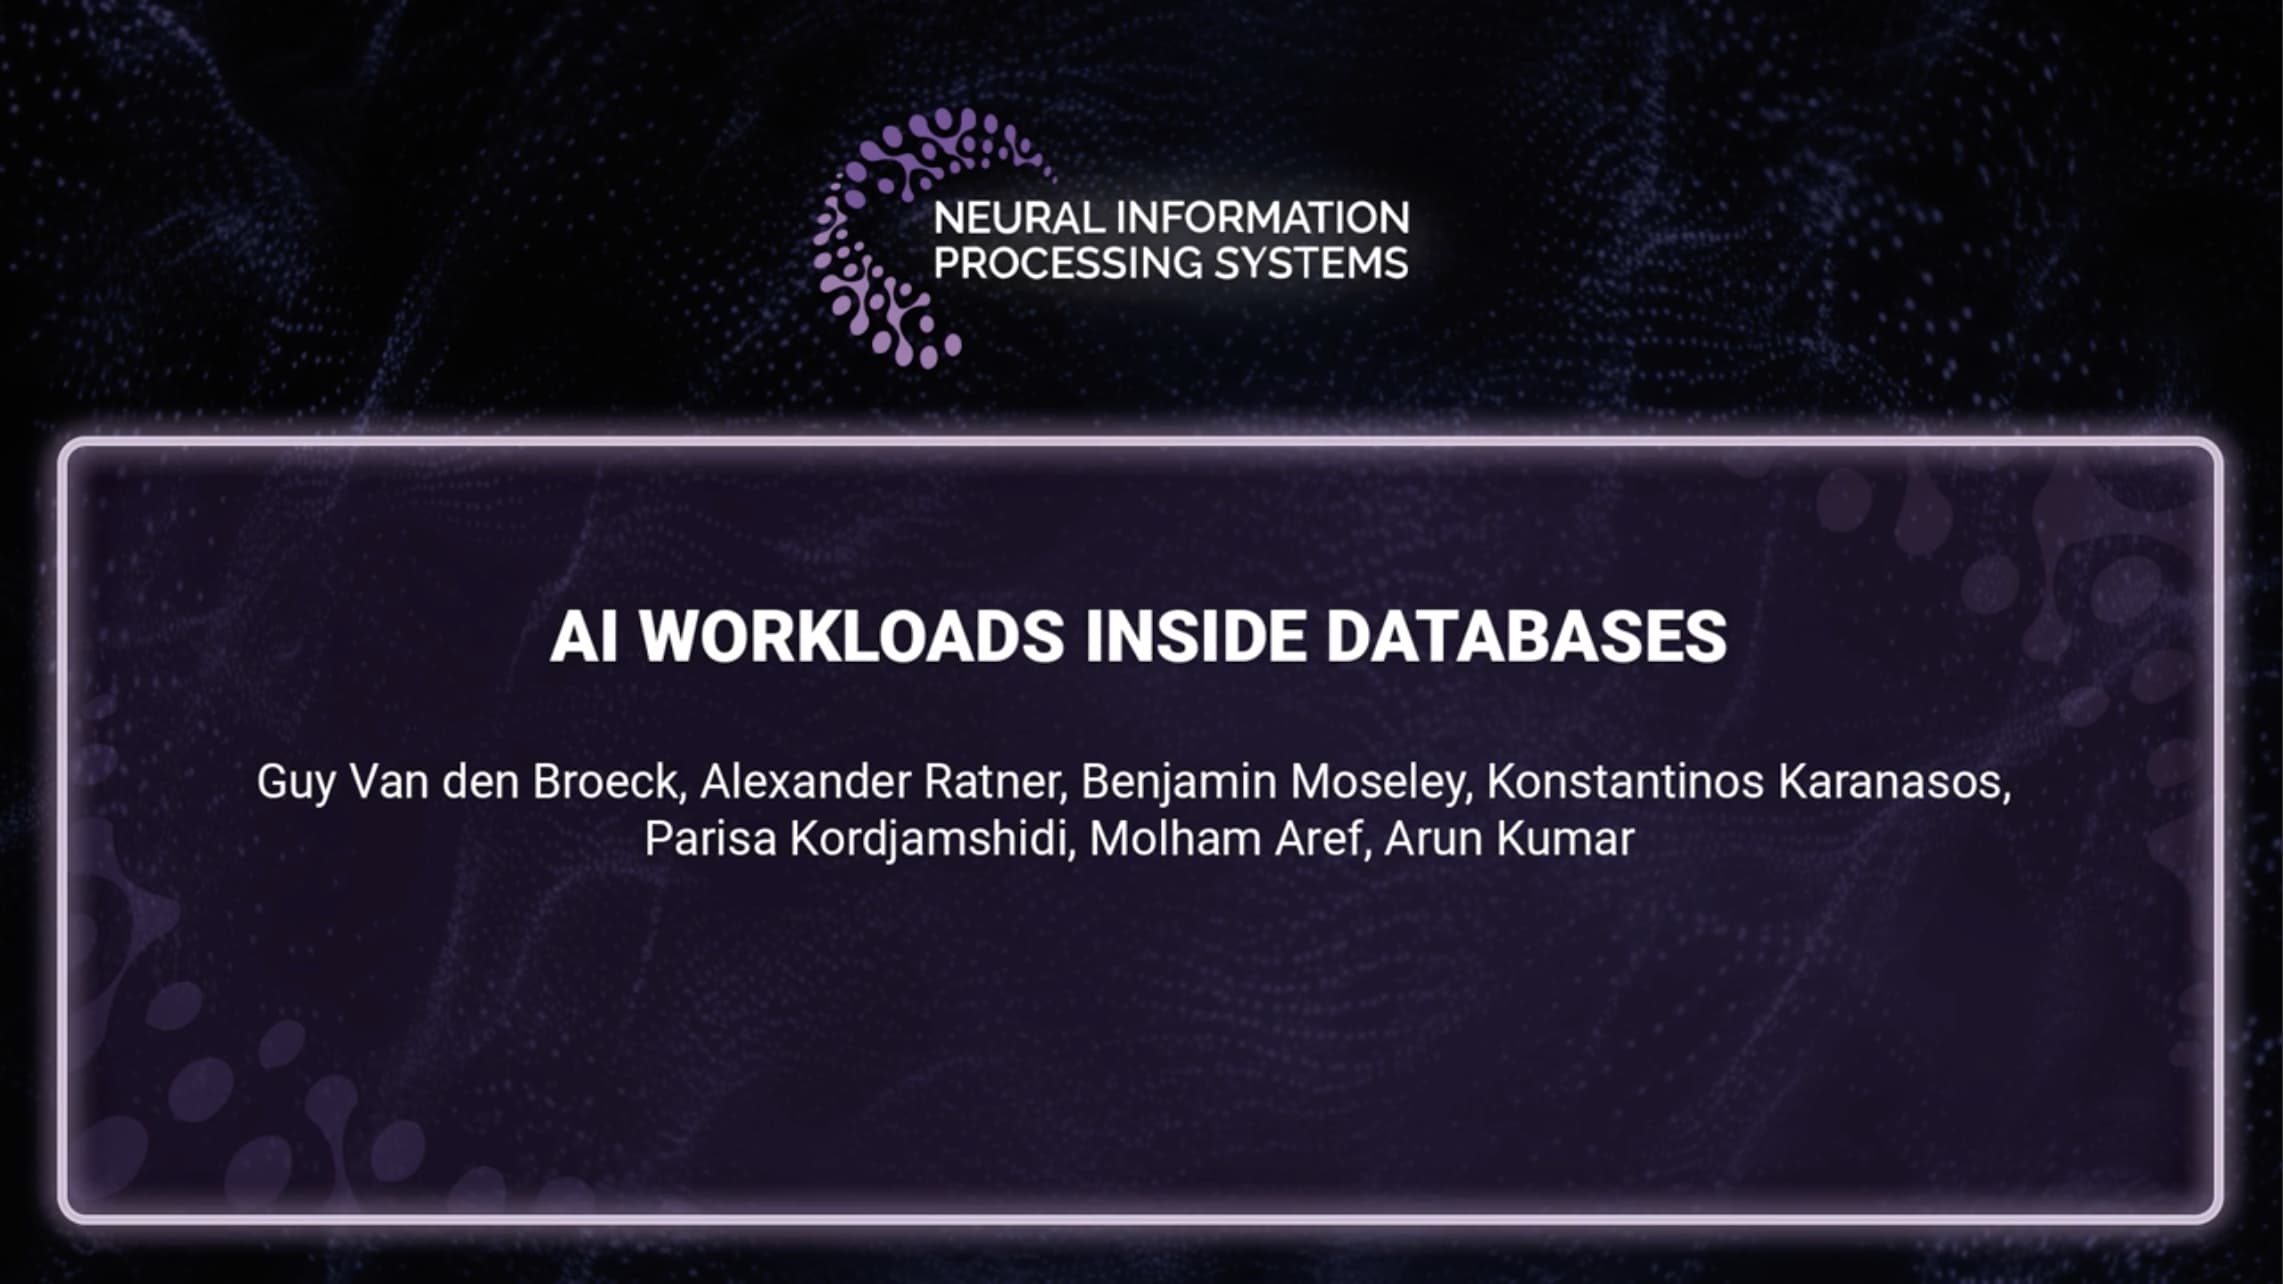 AI workloads inside databases, NeurIPS 2021 image